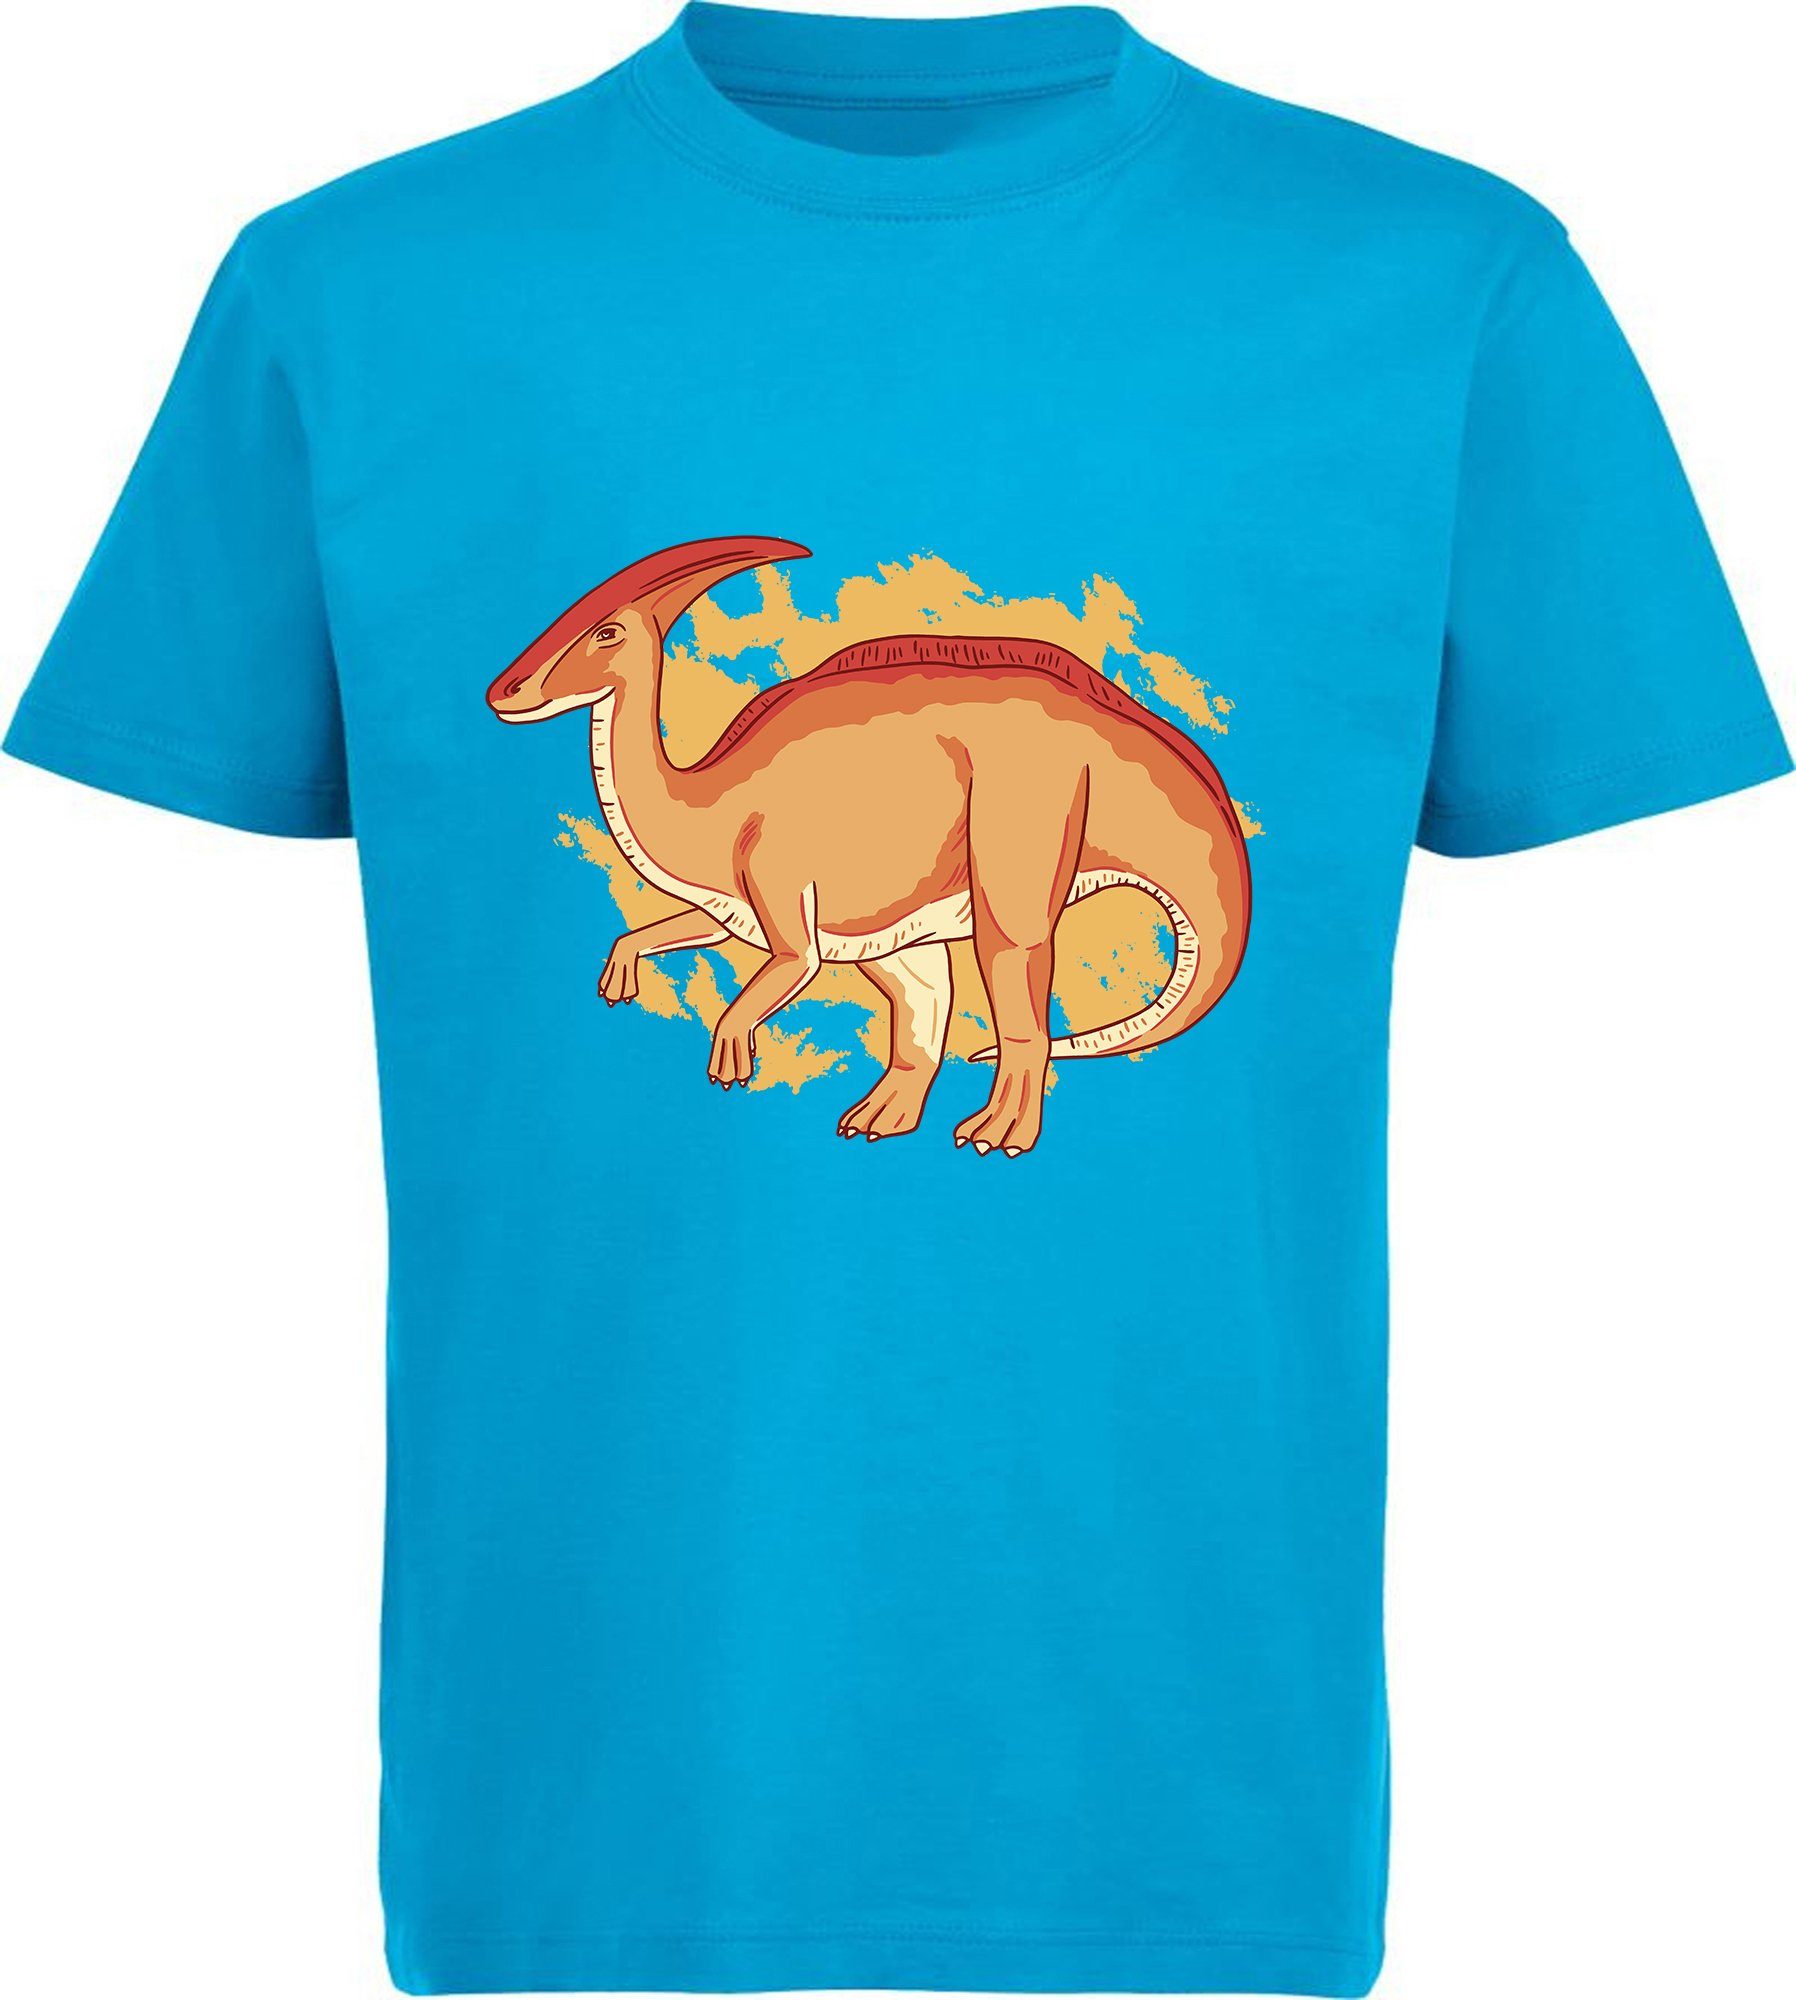 MyDesign24 Print-Shirt bedrucktes Kinder T-Shirt blau mit Baumwollshirt schwarz, i86 rot, Parasaurolophus Dino, blau, mit aqua weiß